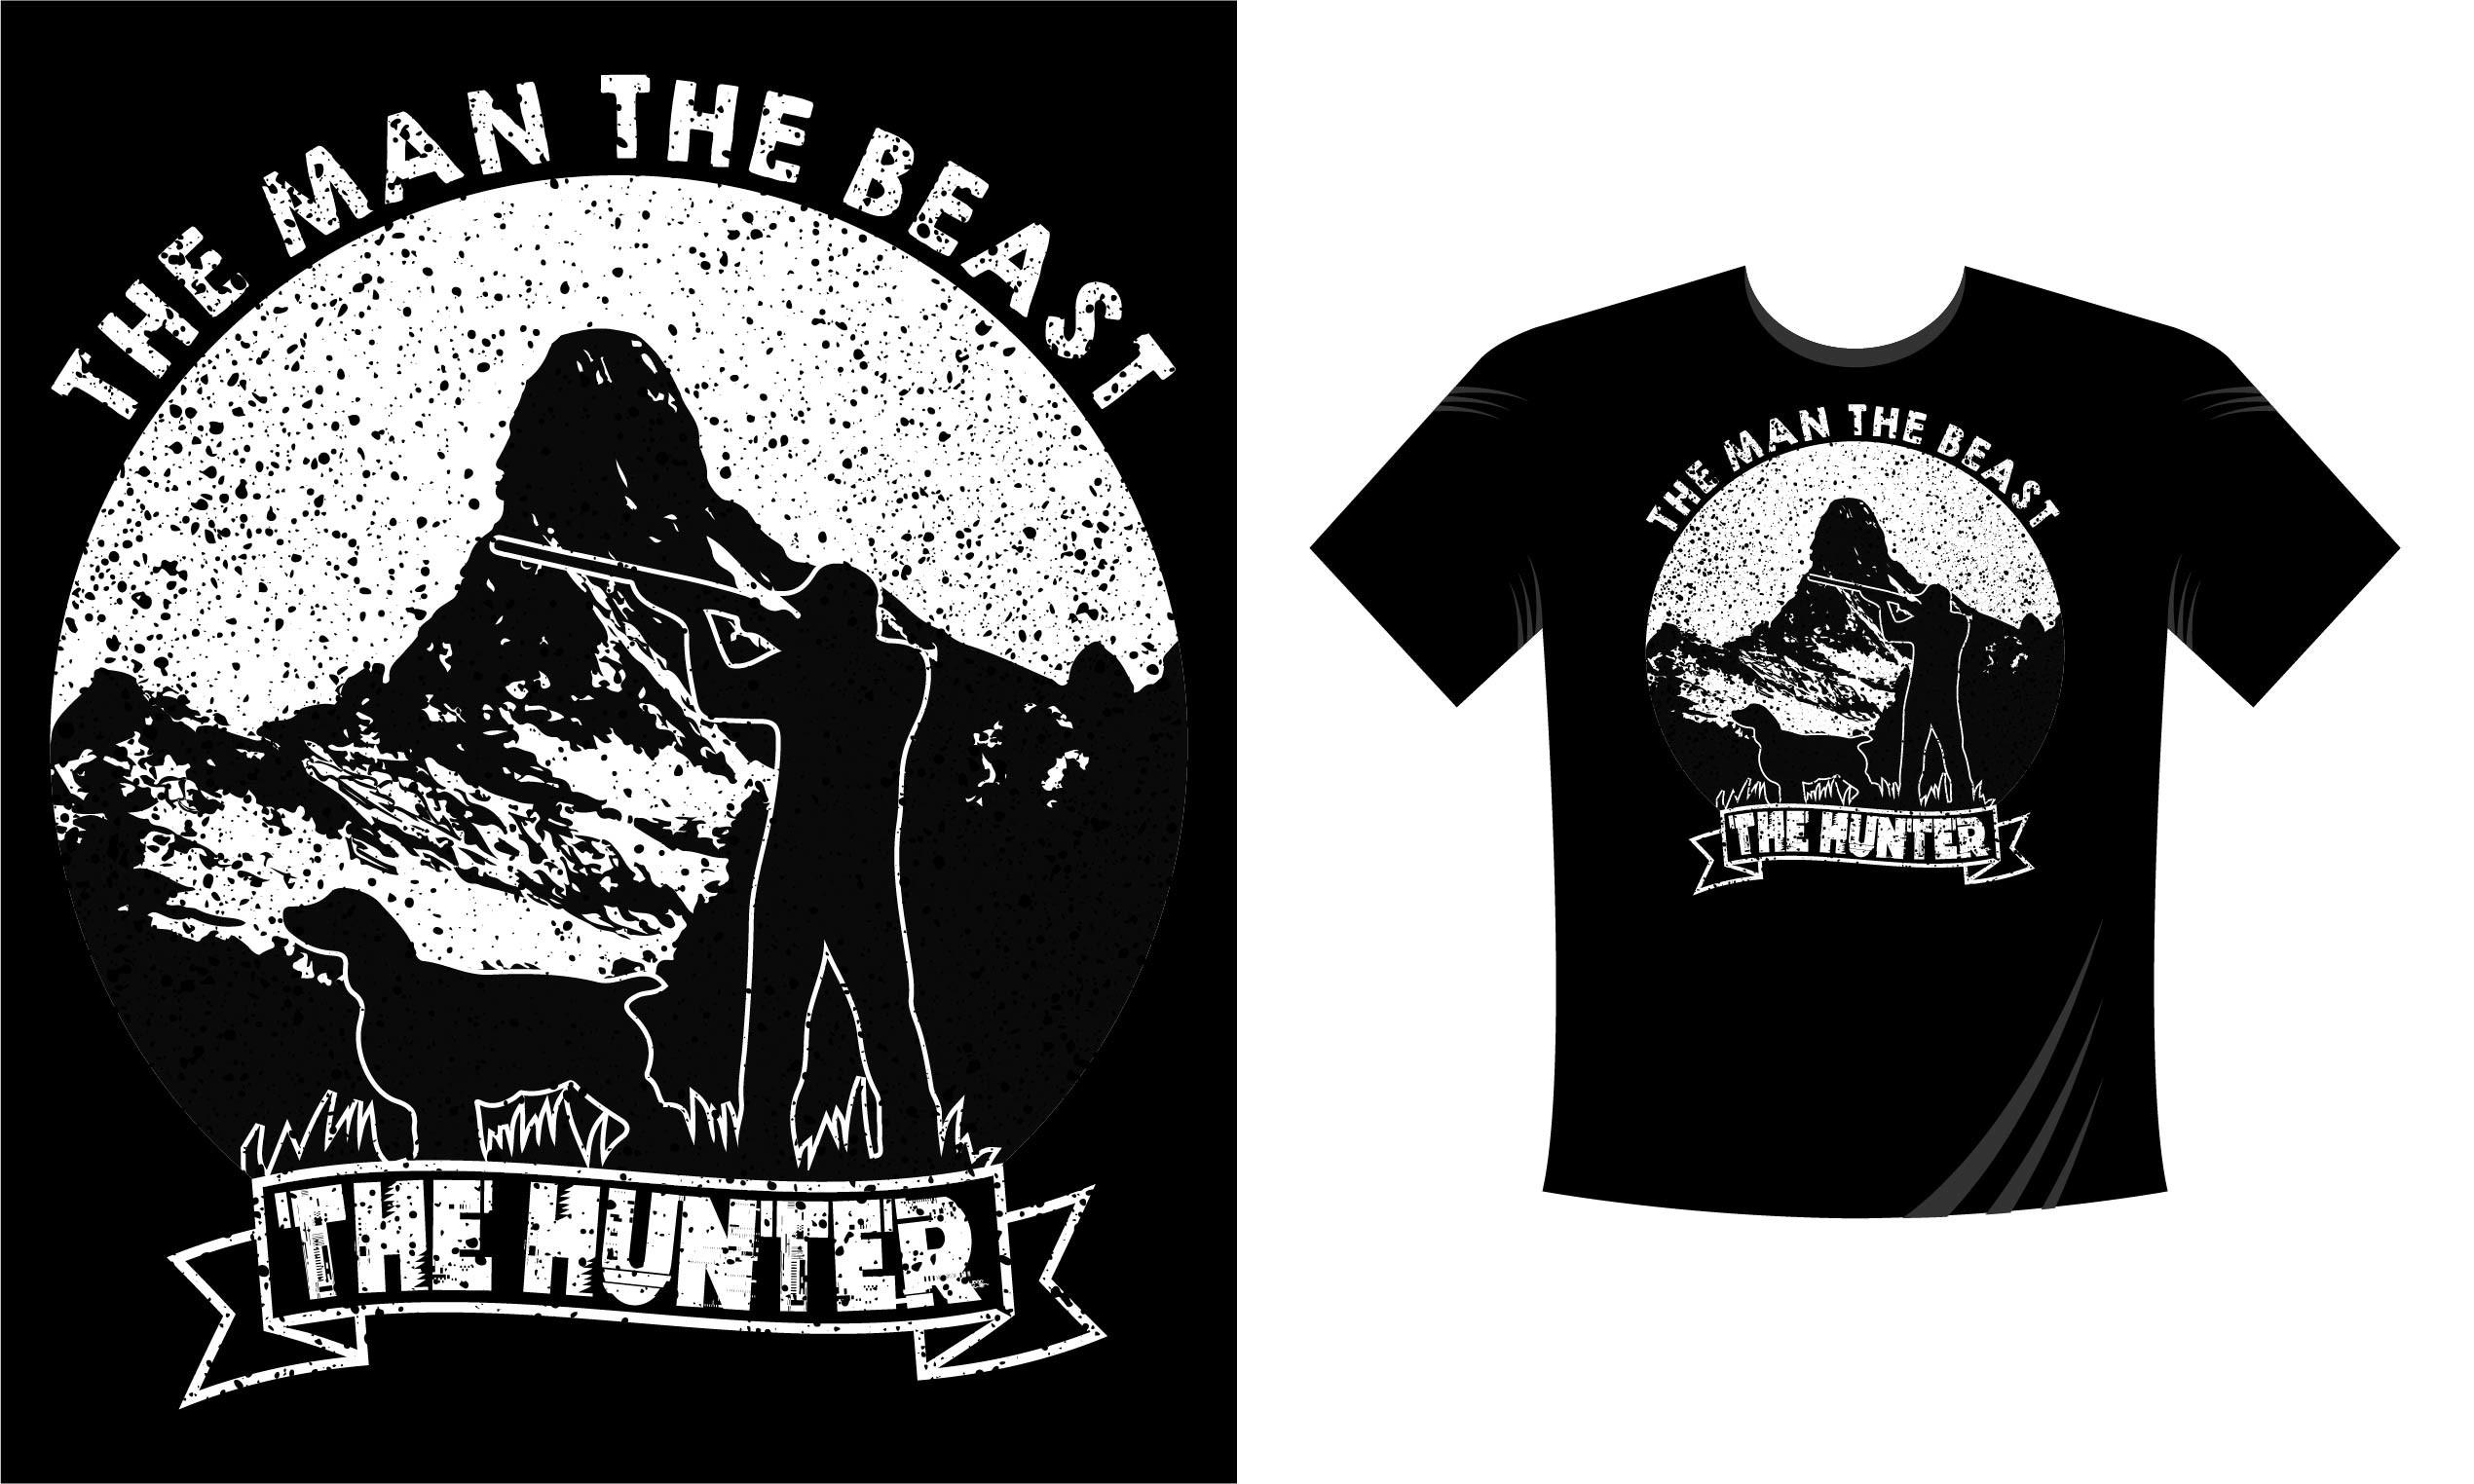 The Man the Beast the Hunter T-Shirt